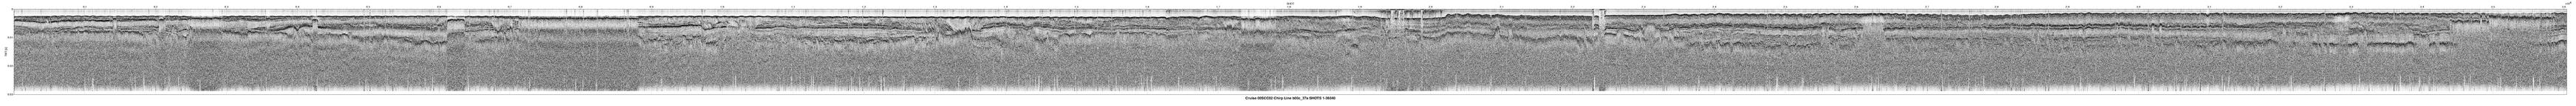 00SCC02 b00c_37a seismic profile image